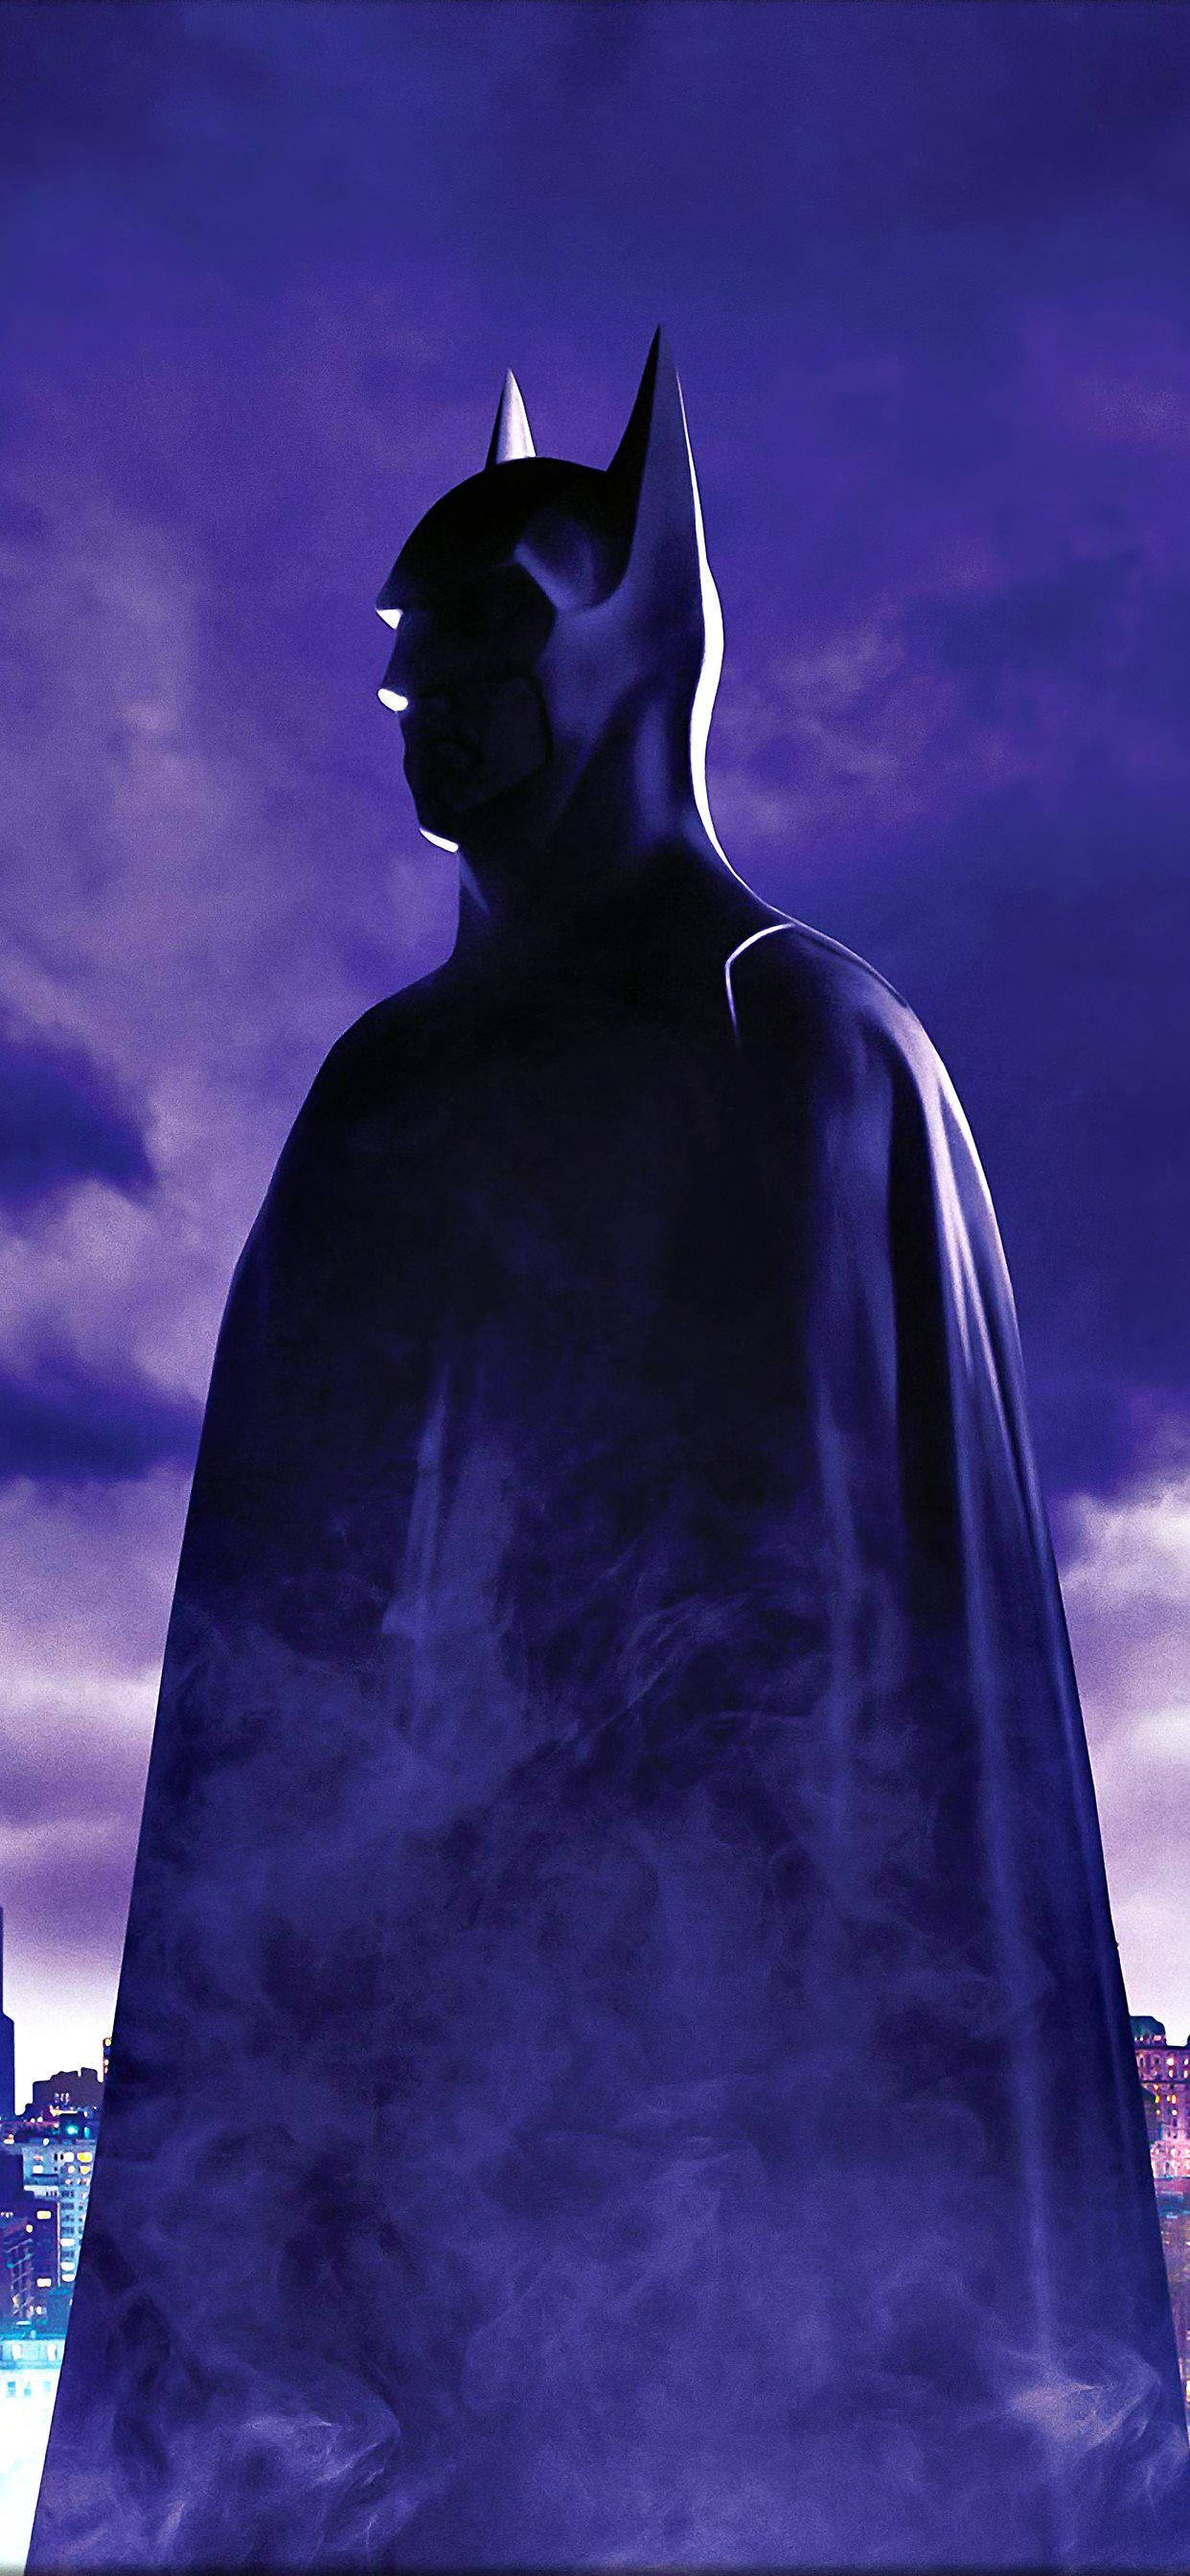 Batman With Purple Smoke iPhone X Wallpaper